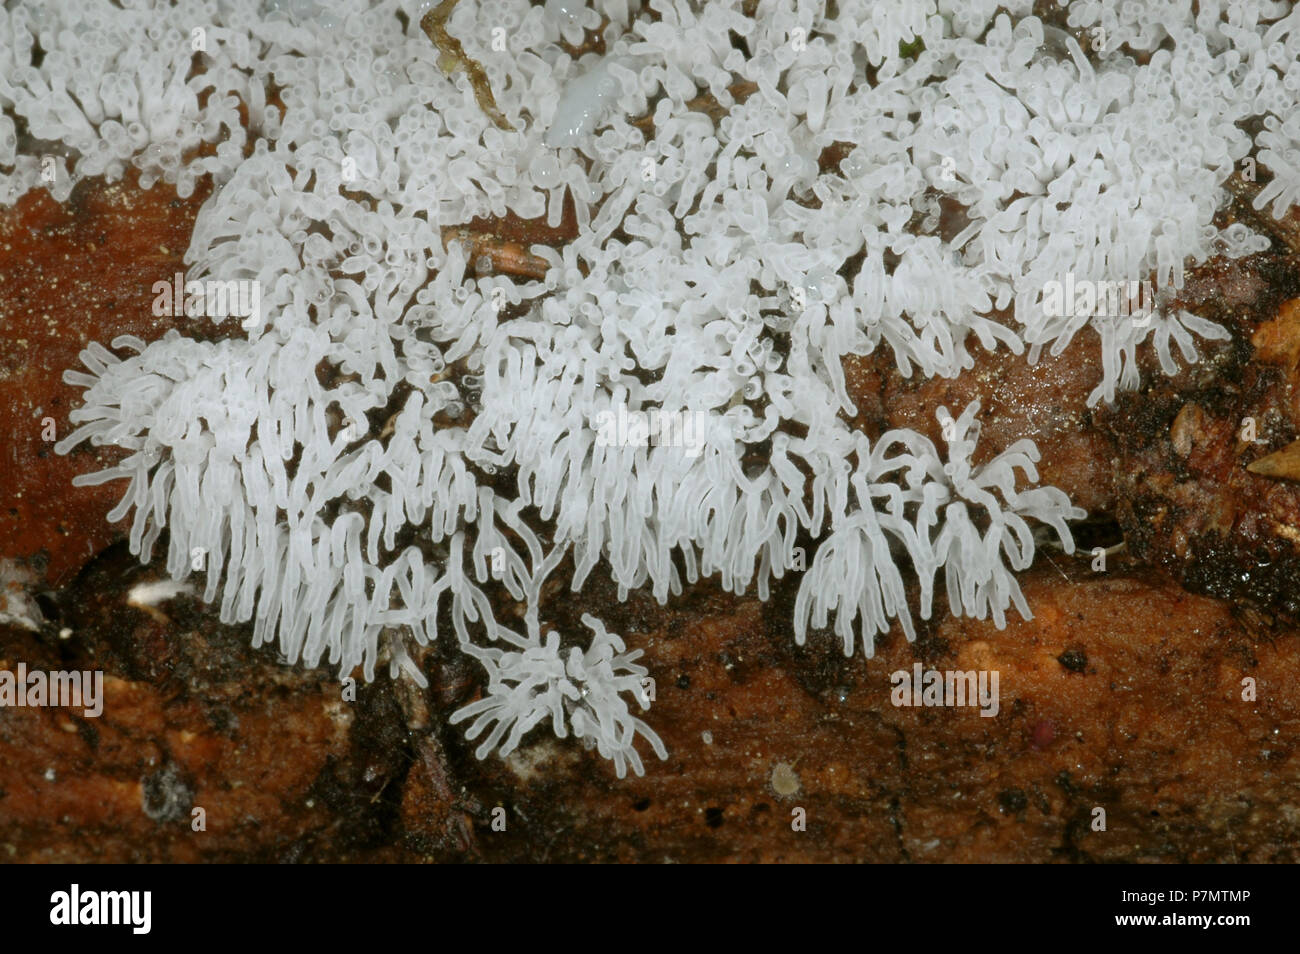 Plasmodium de myxomycetes Ceratiomyxa fruticulosa Foto de stock